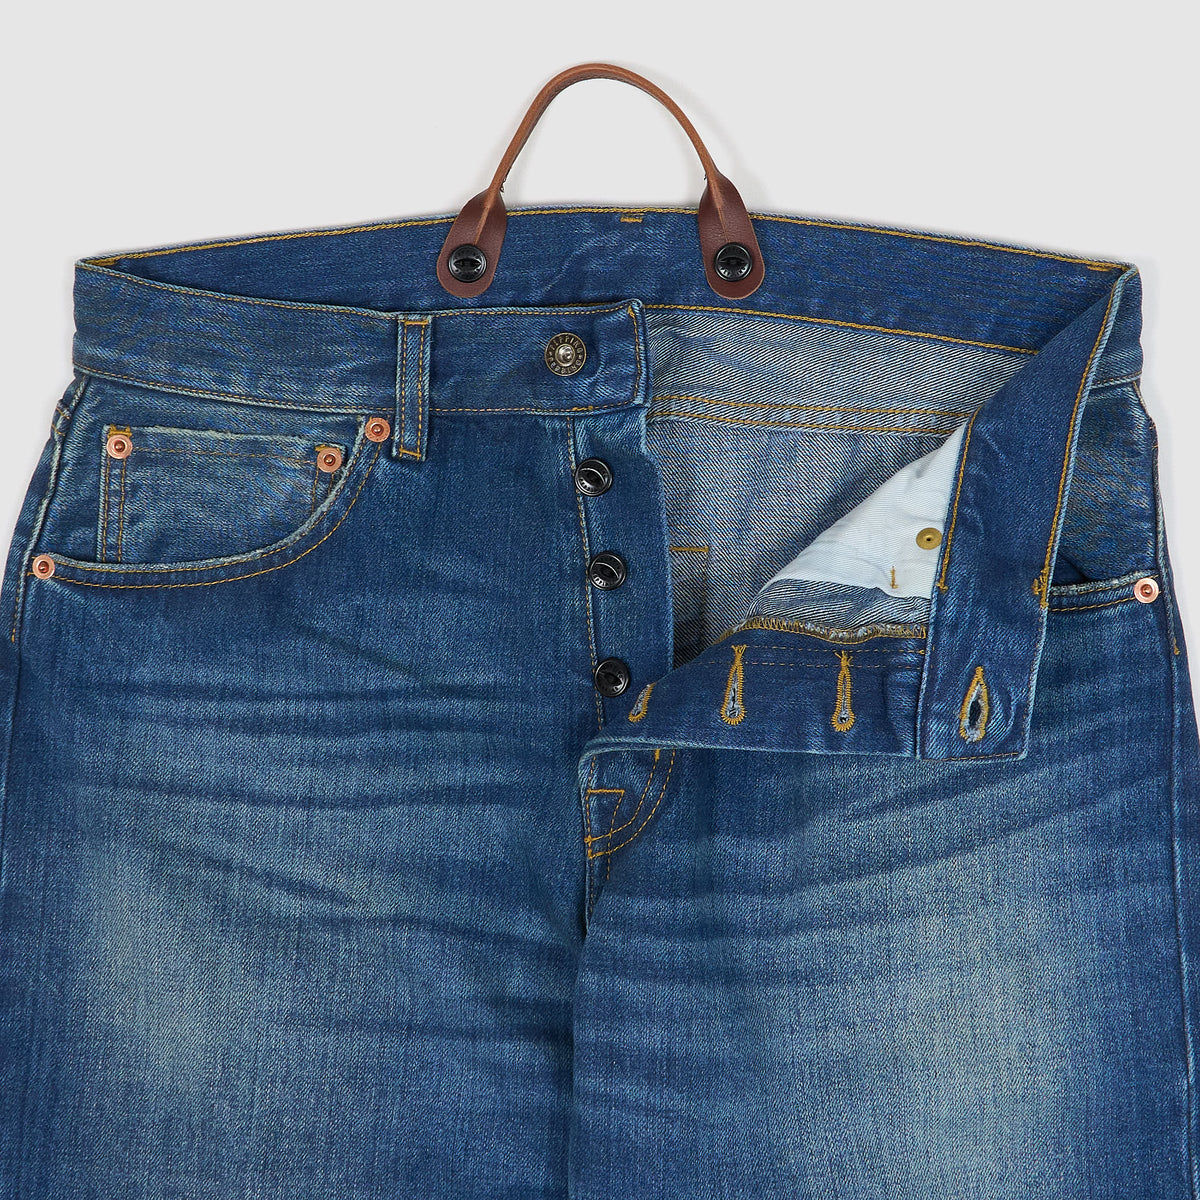 Peppino Peppino Ladies 5-Pocket Selvedge Jeans